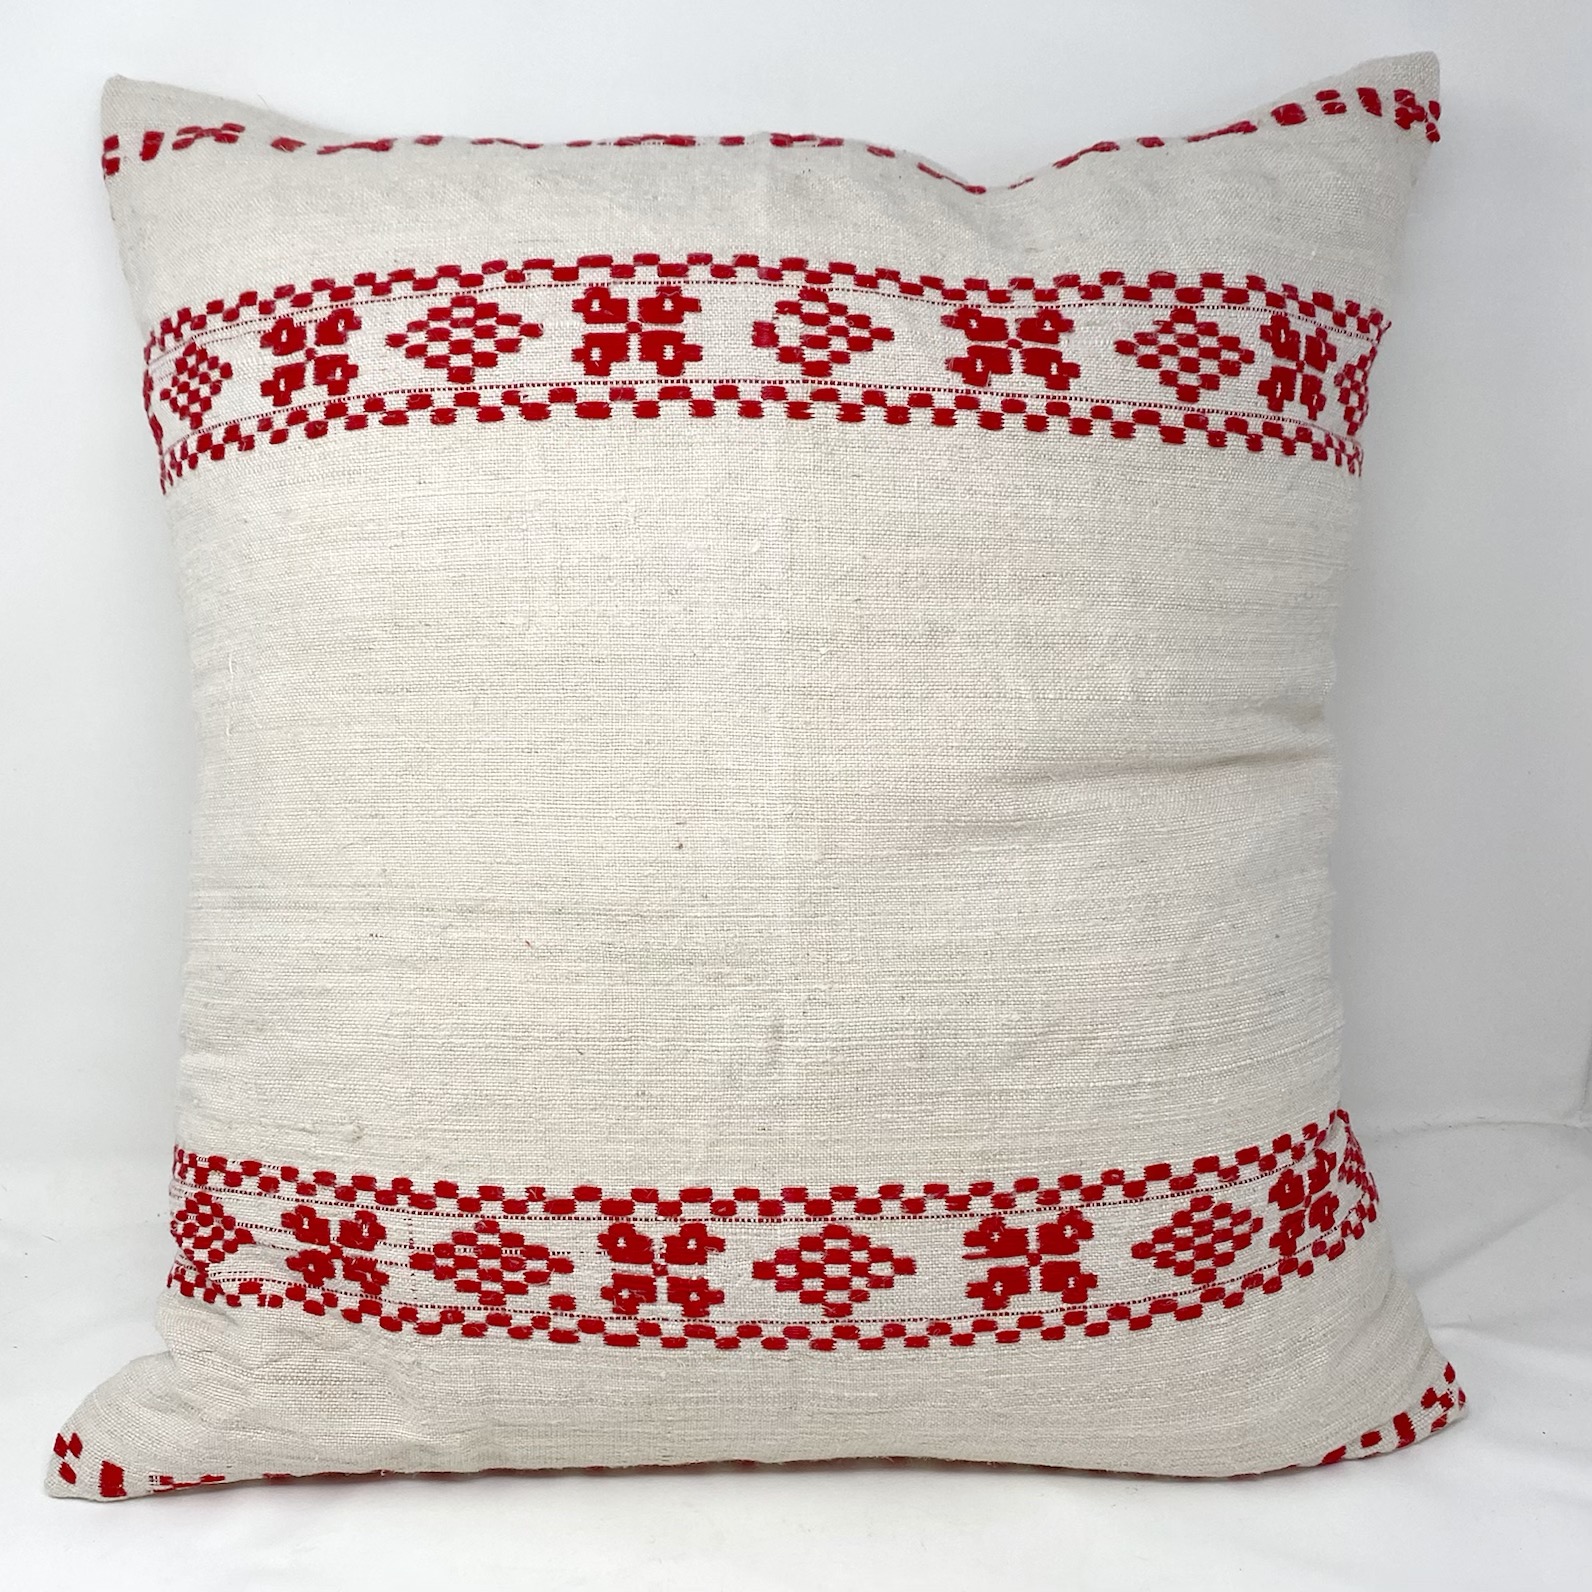 Pale & Interesting Vintage Eastern European Folk Embroidery Cushion Cover